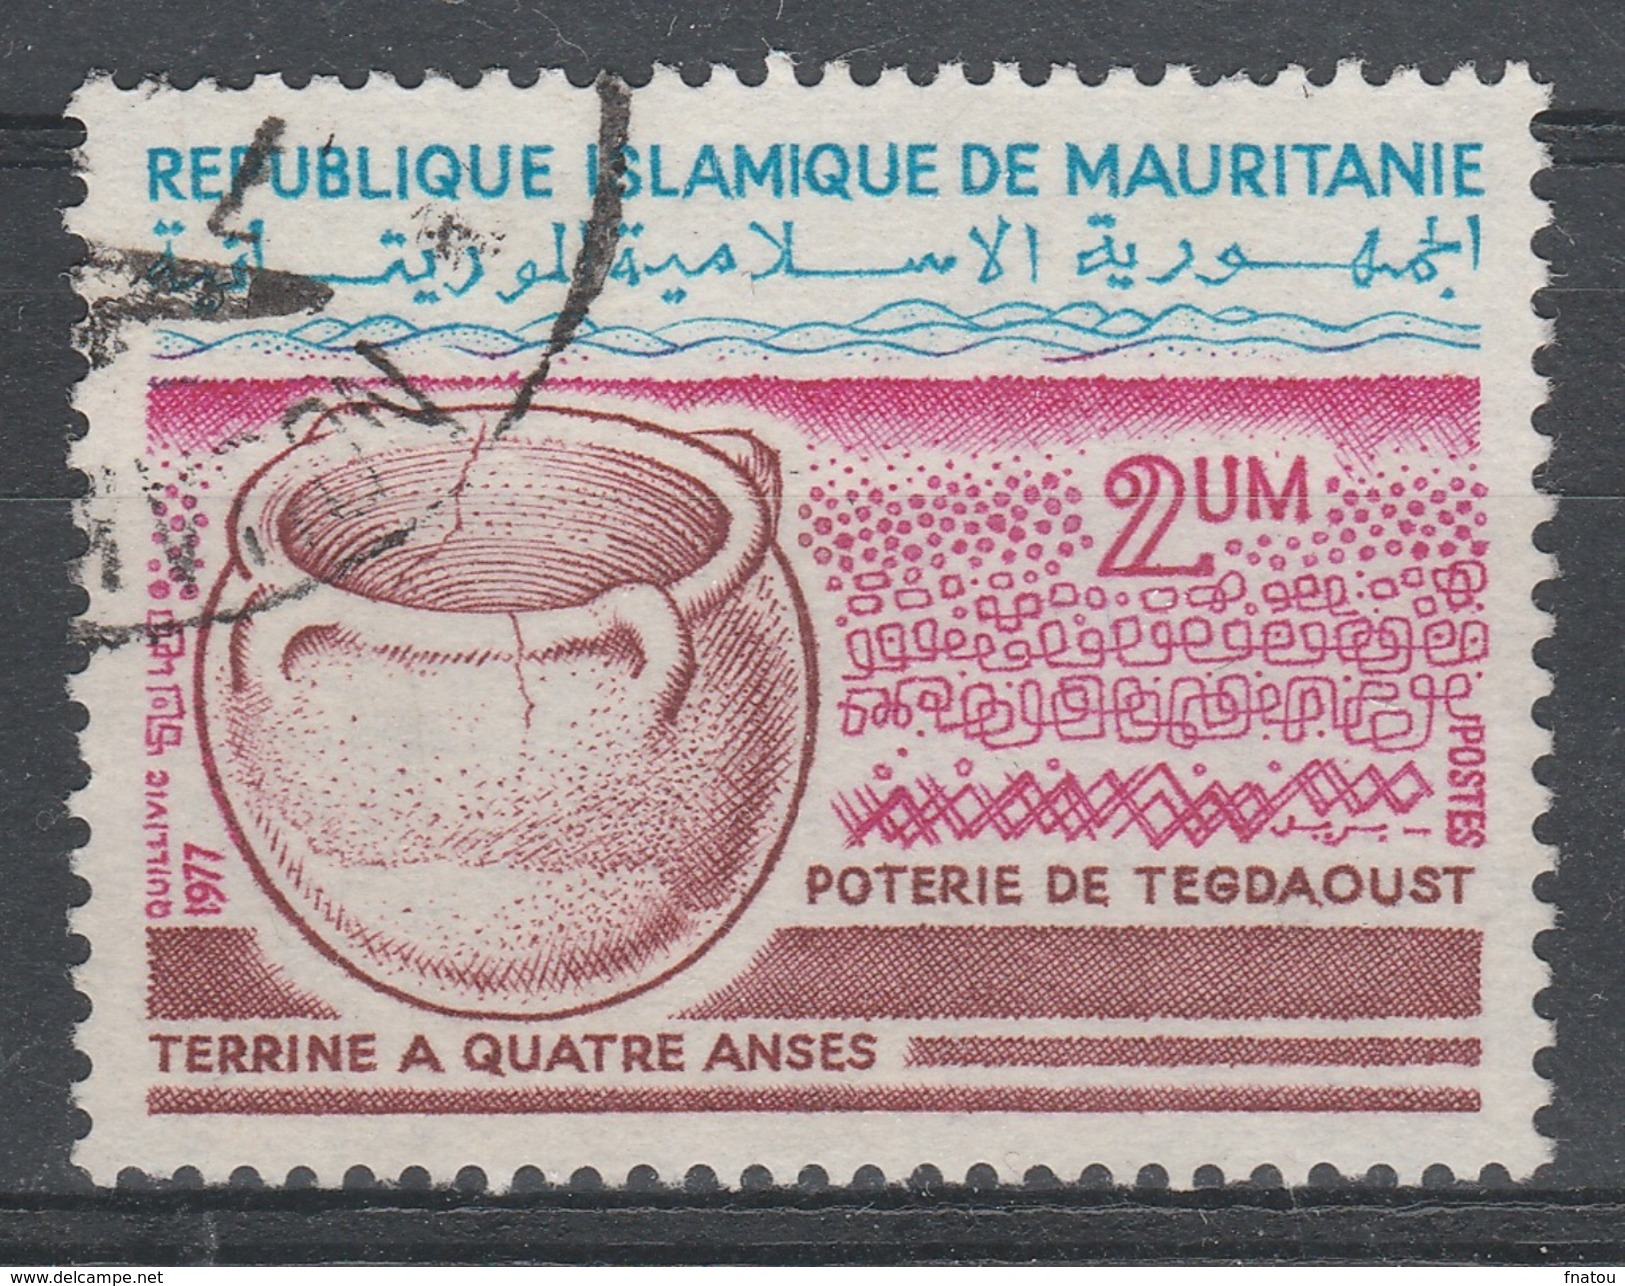 Mauritania, Pottery, 2 Um, 1977, VFU - Mauritania (1960-...)